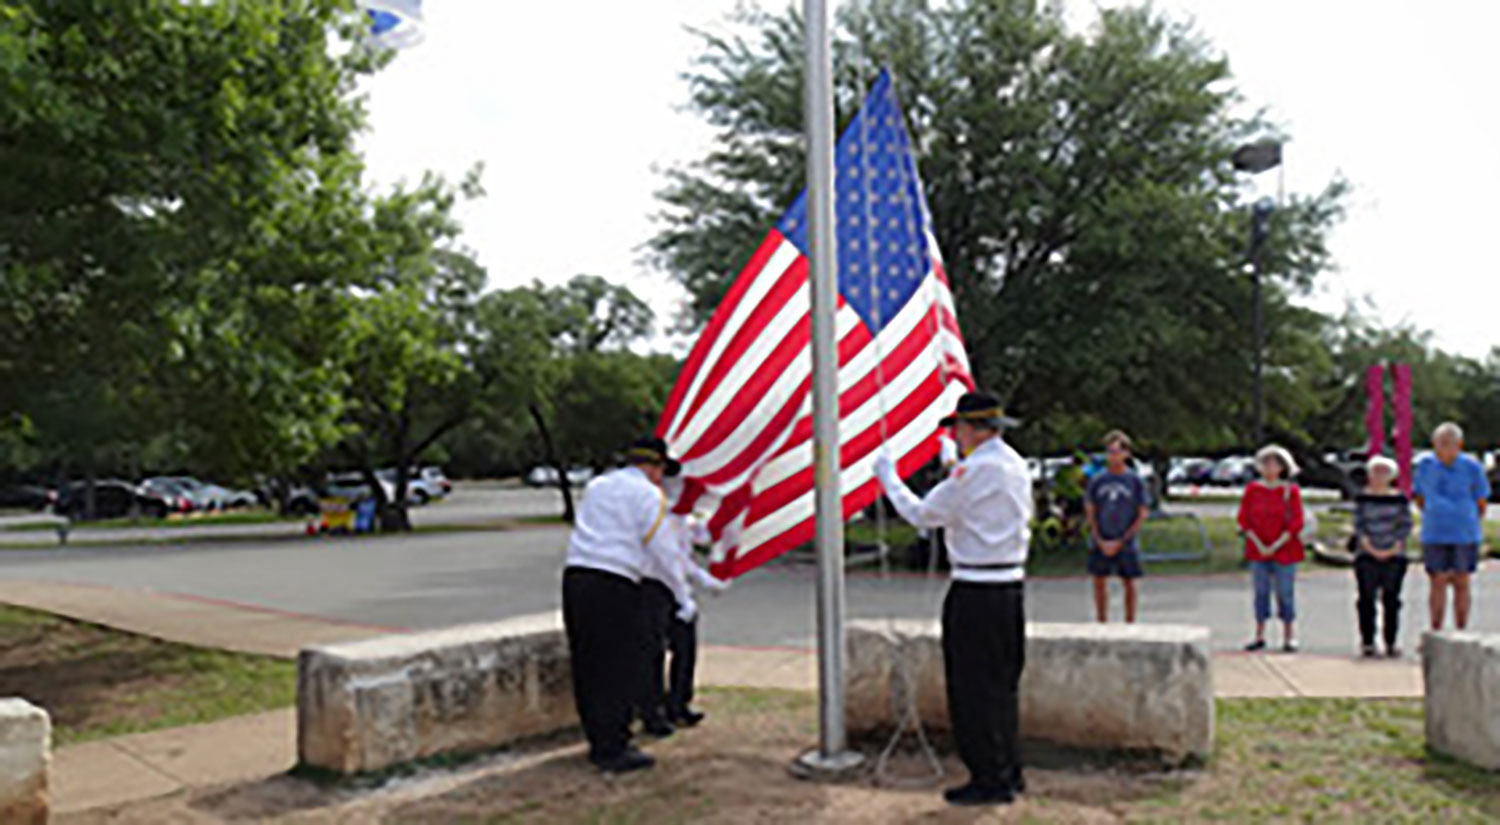 Jewish War Veterans preparing to raise the American flag